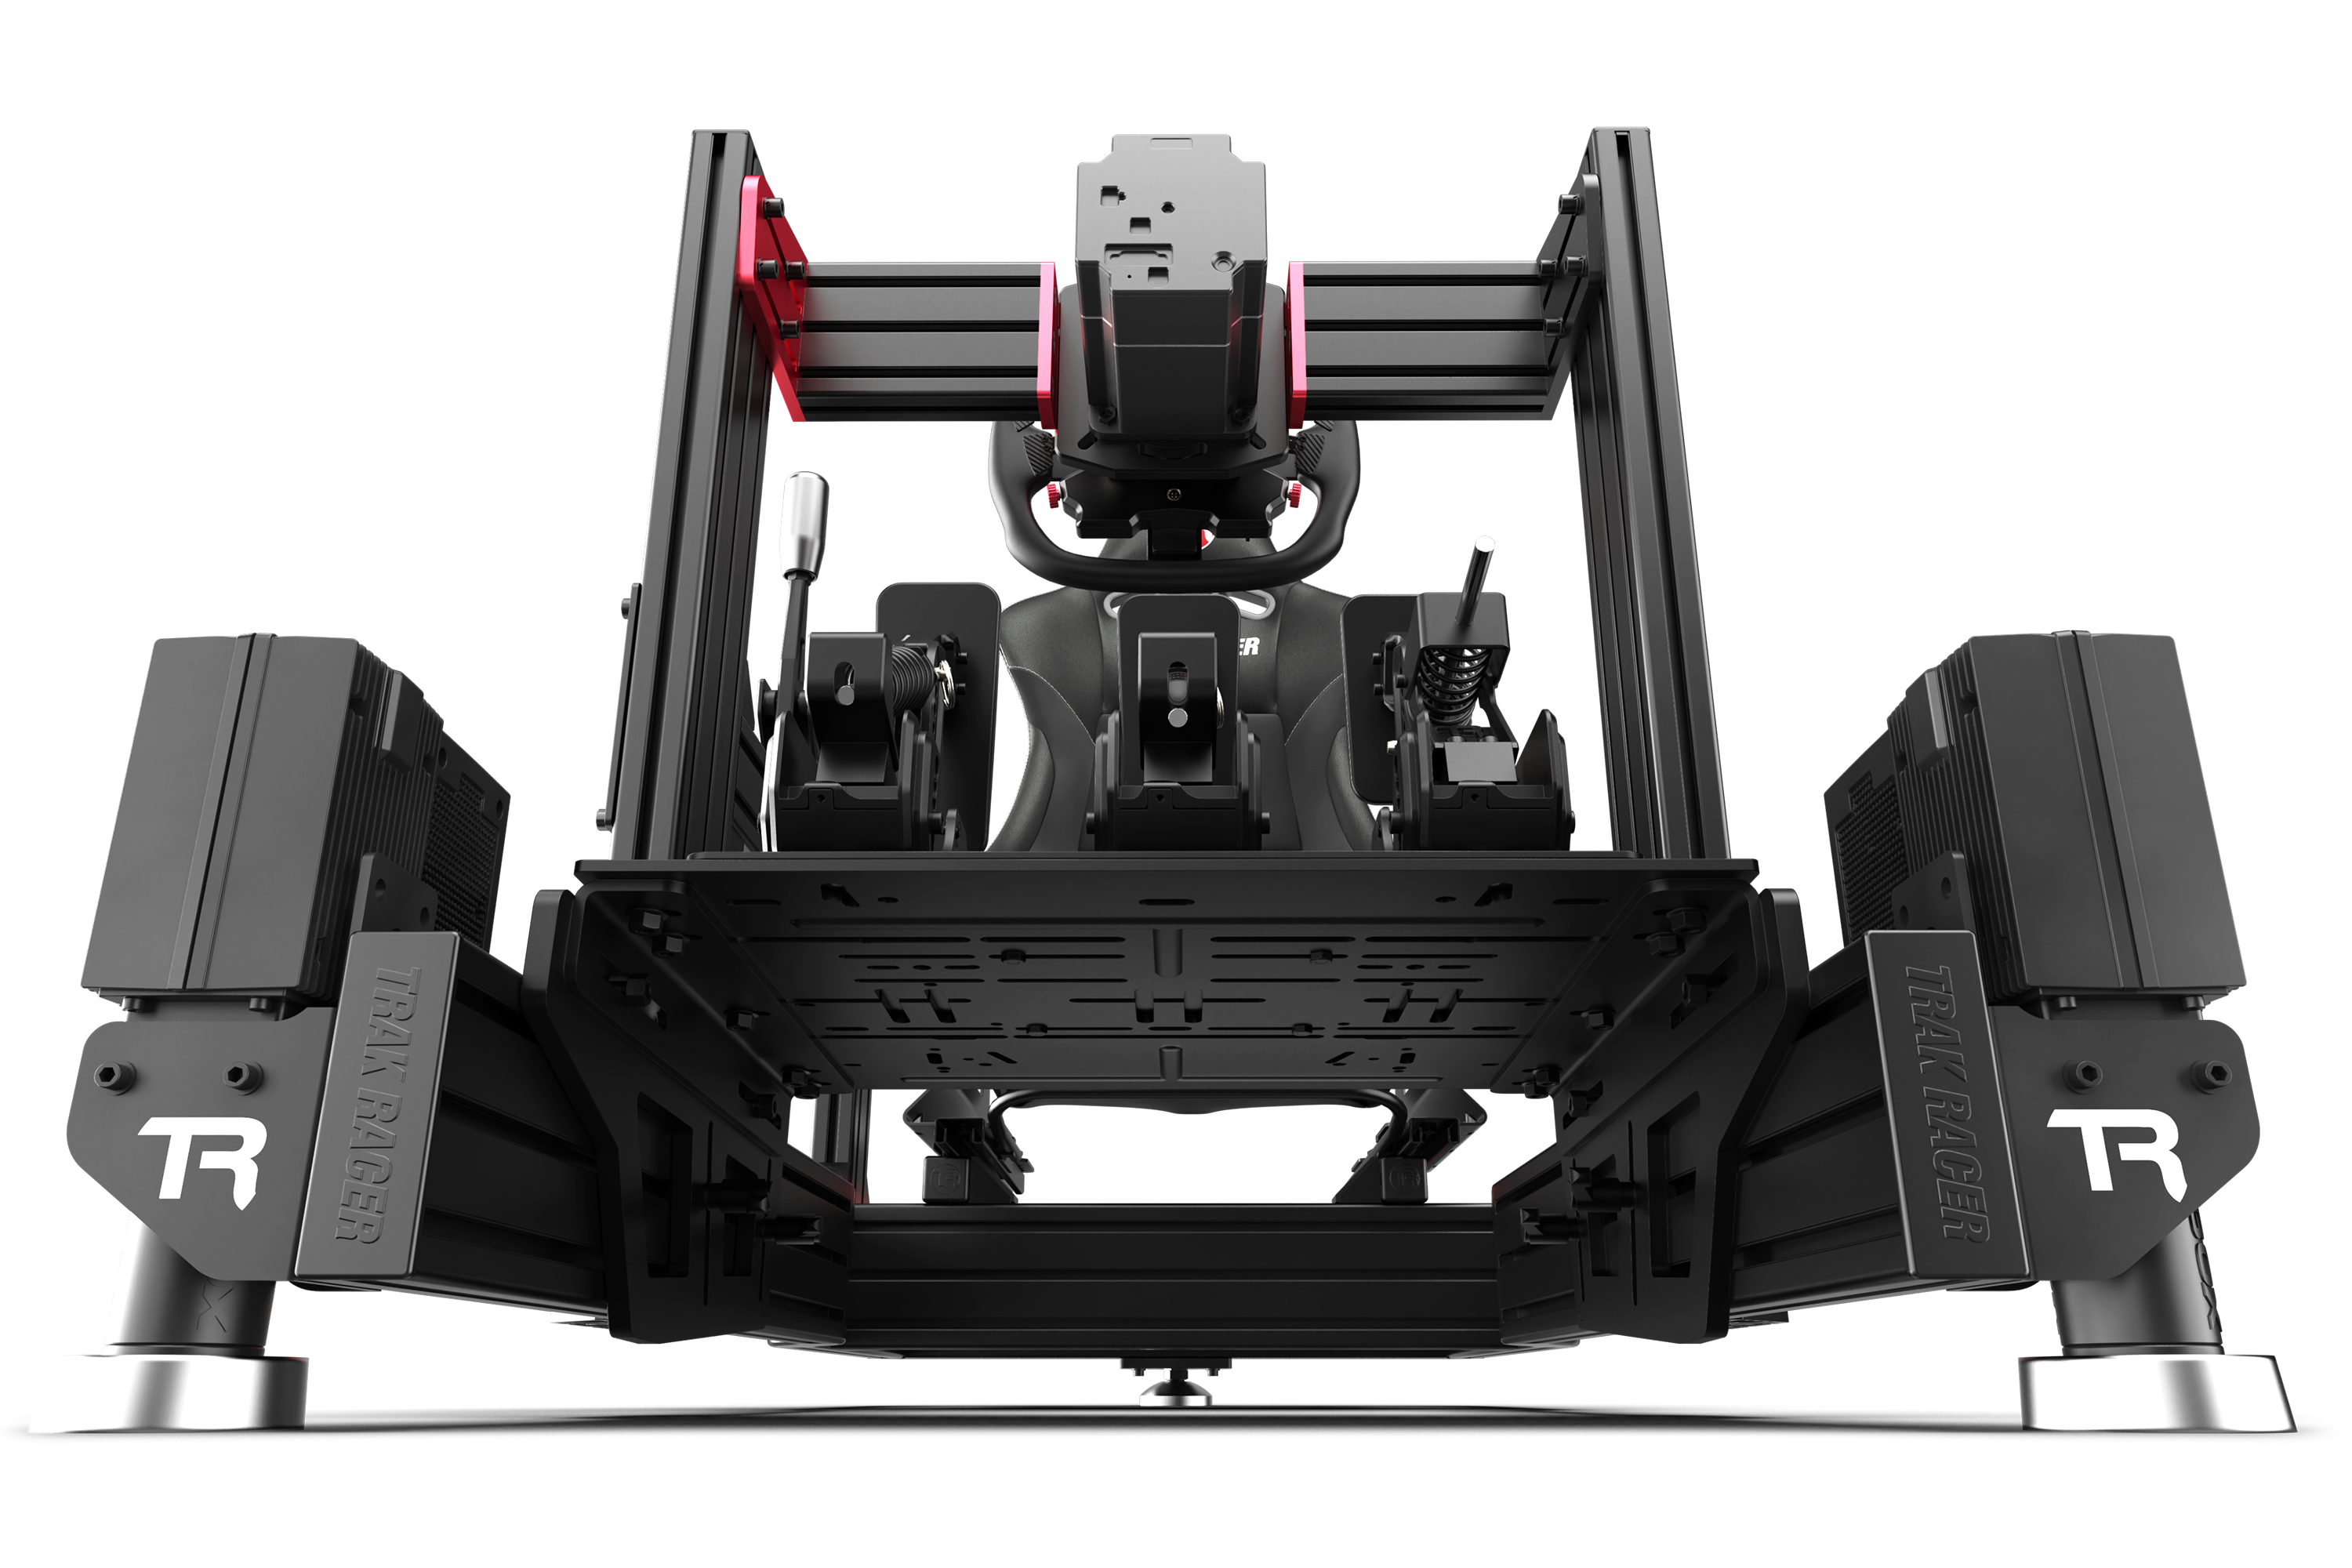 D-BOX GEN 5 2250i Haptic System with 2 motion actuators (1.5" stroke/travel range)